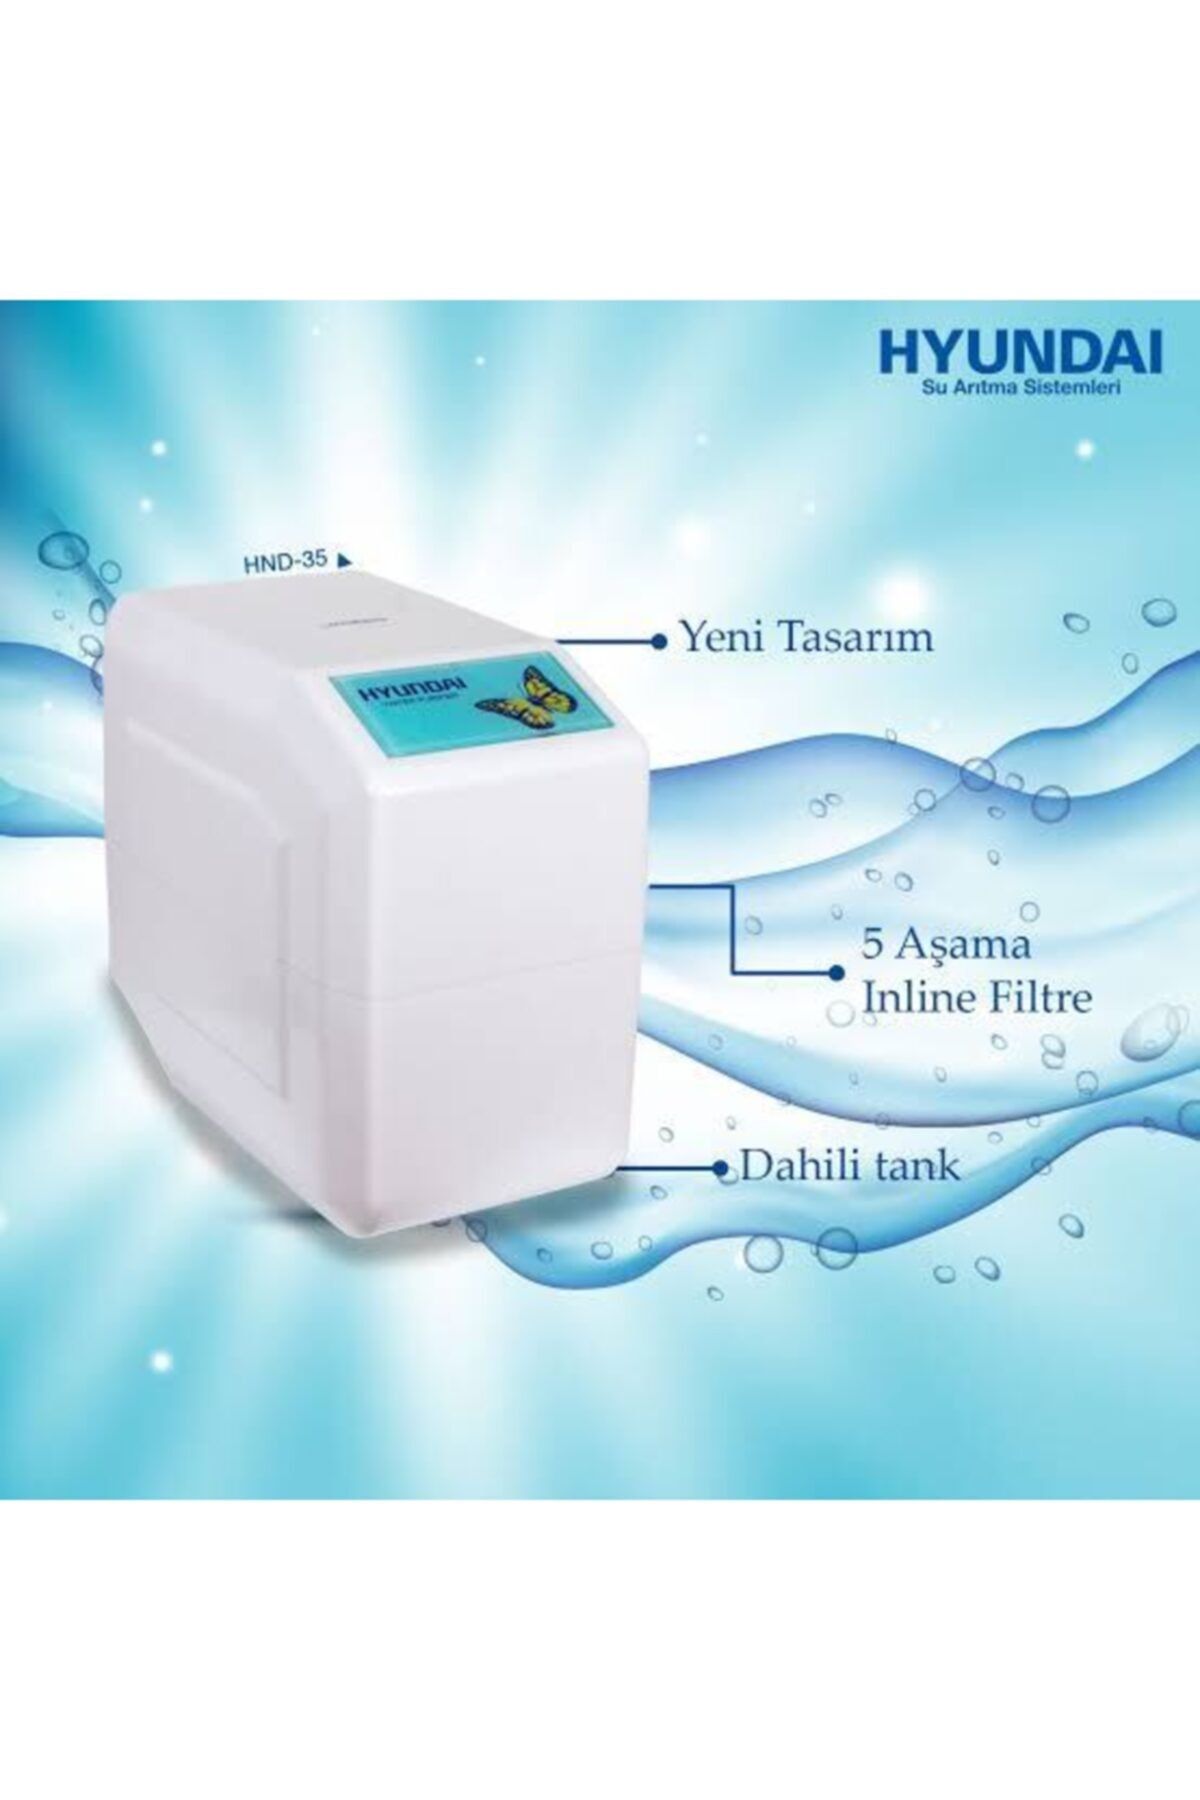 Hyundai Su Arıtma Cihazı